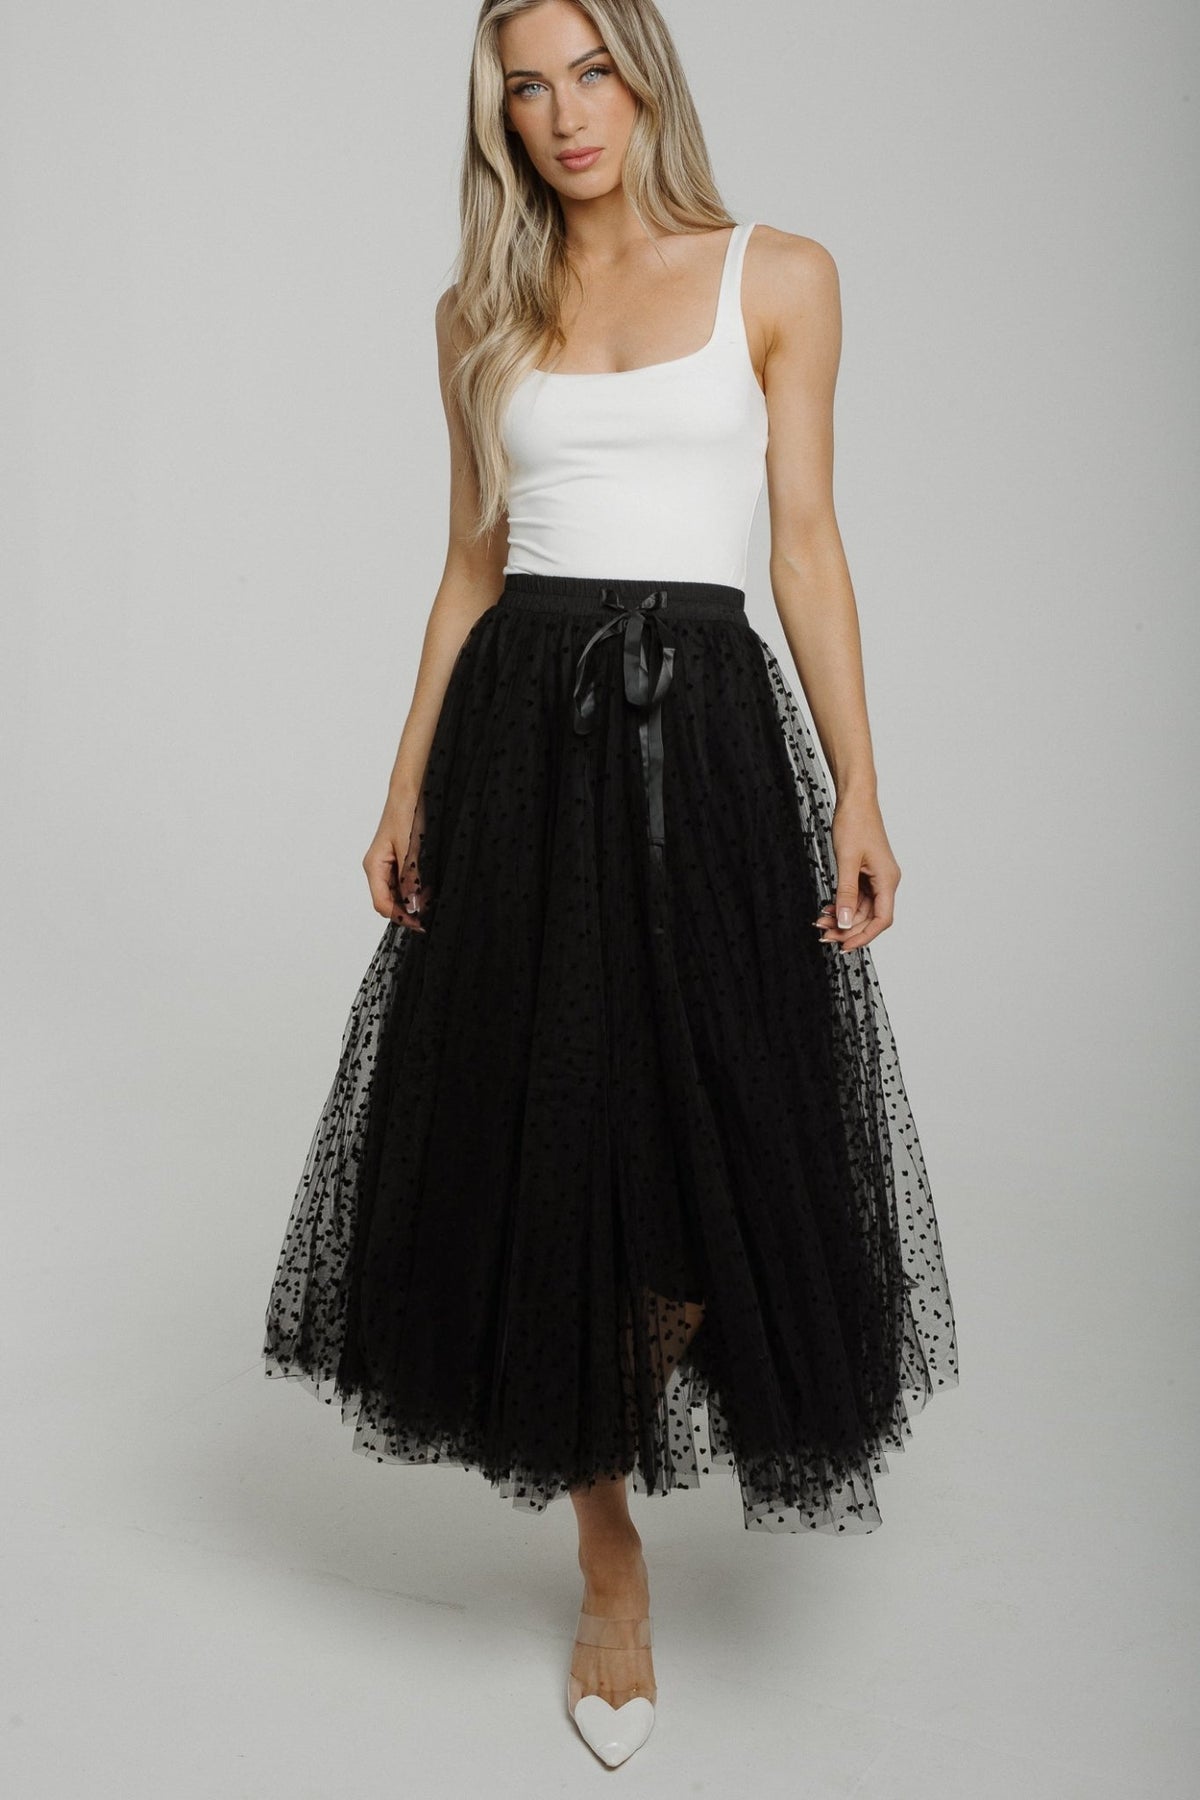 Polly Heart Print Tulle Skirt In Black - The Walk in Wardrobe